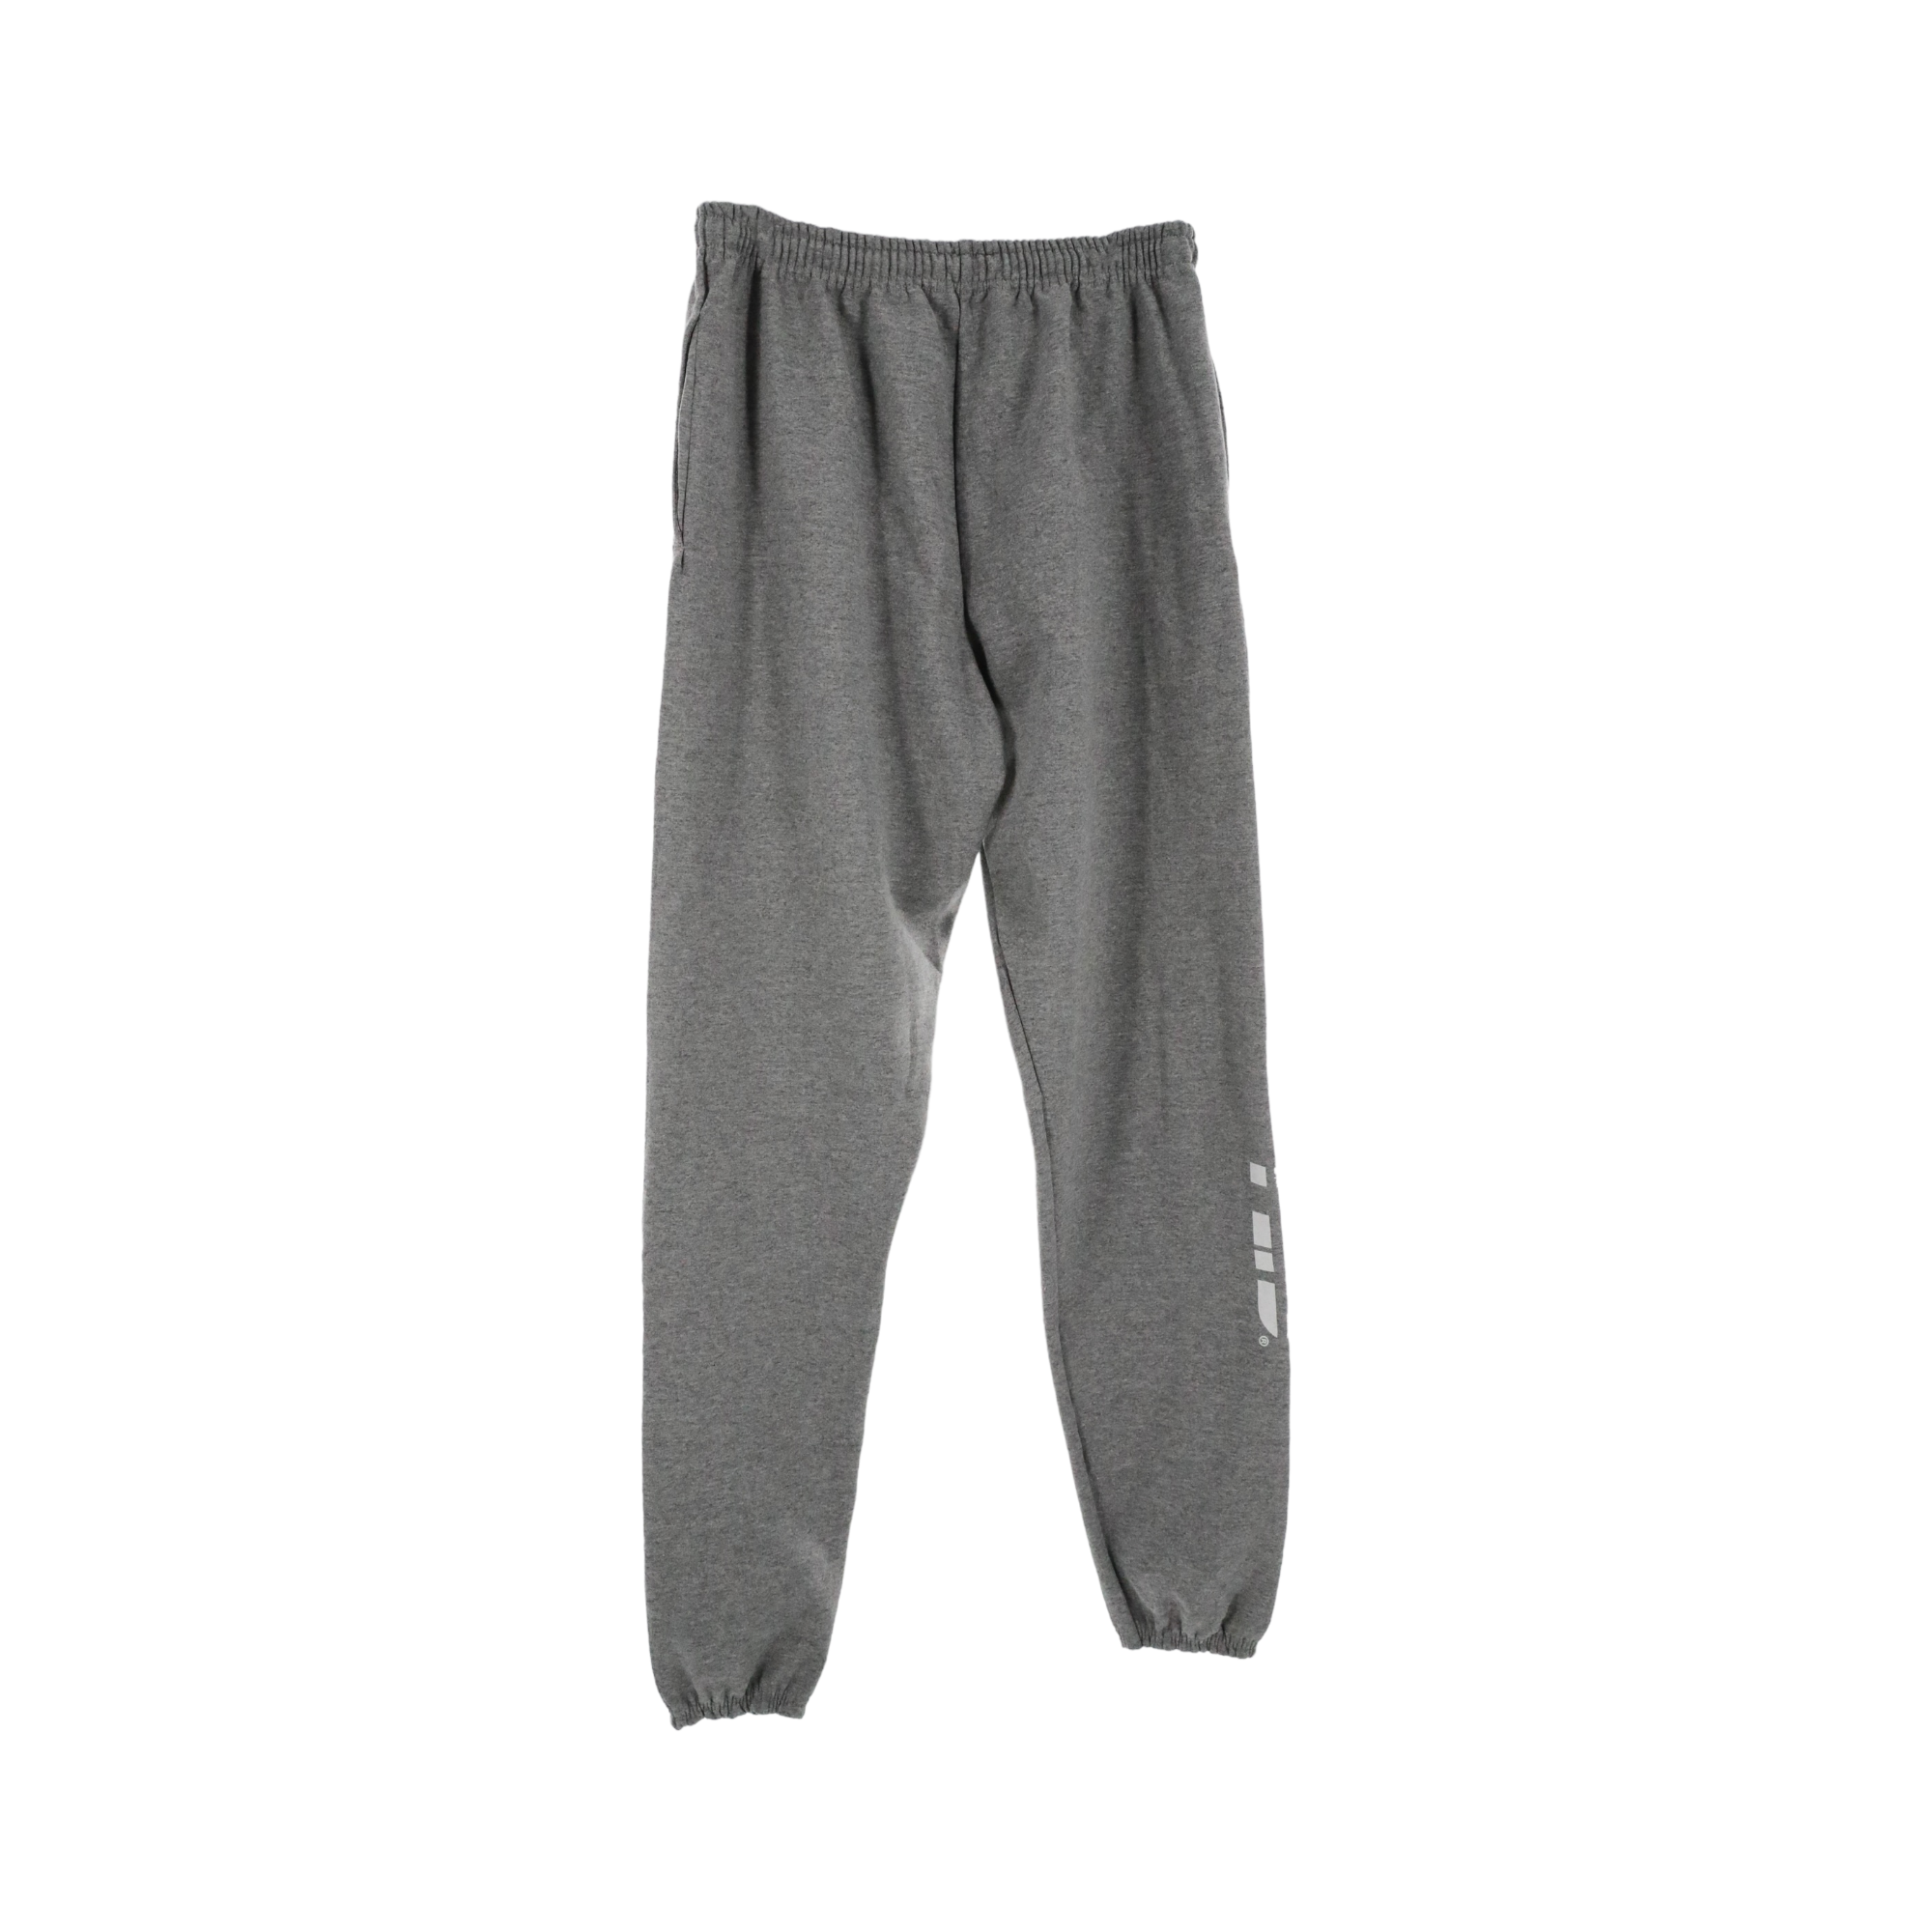 PLTD Logo - Grey Sweatpants